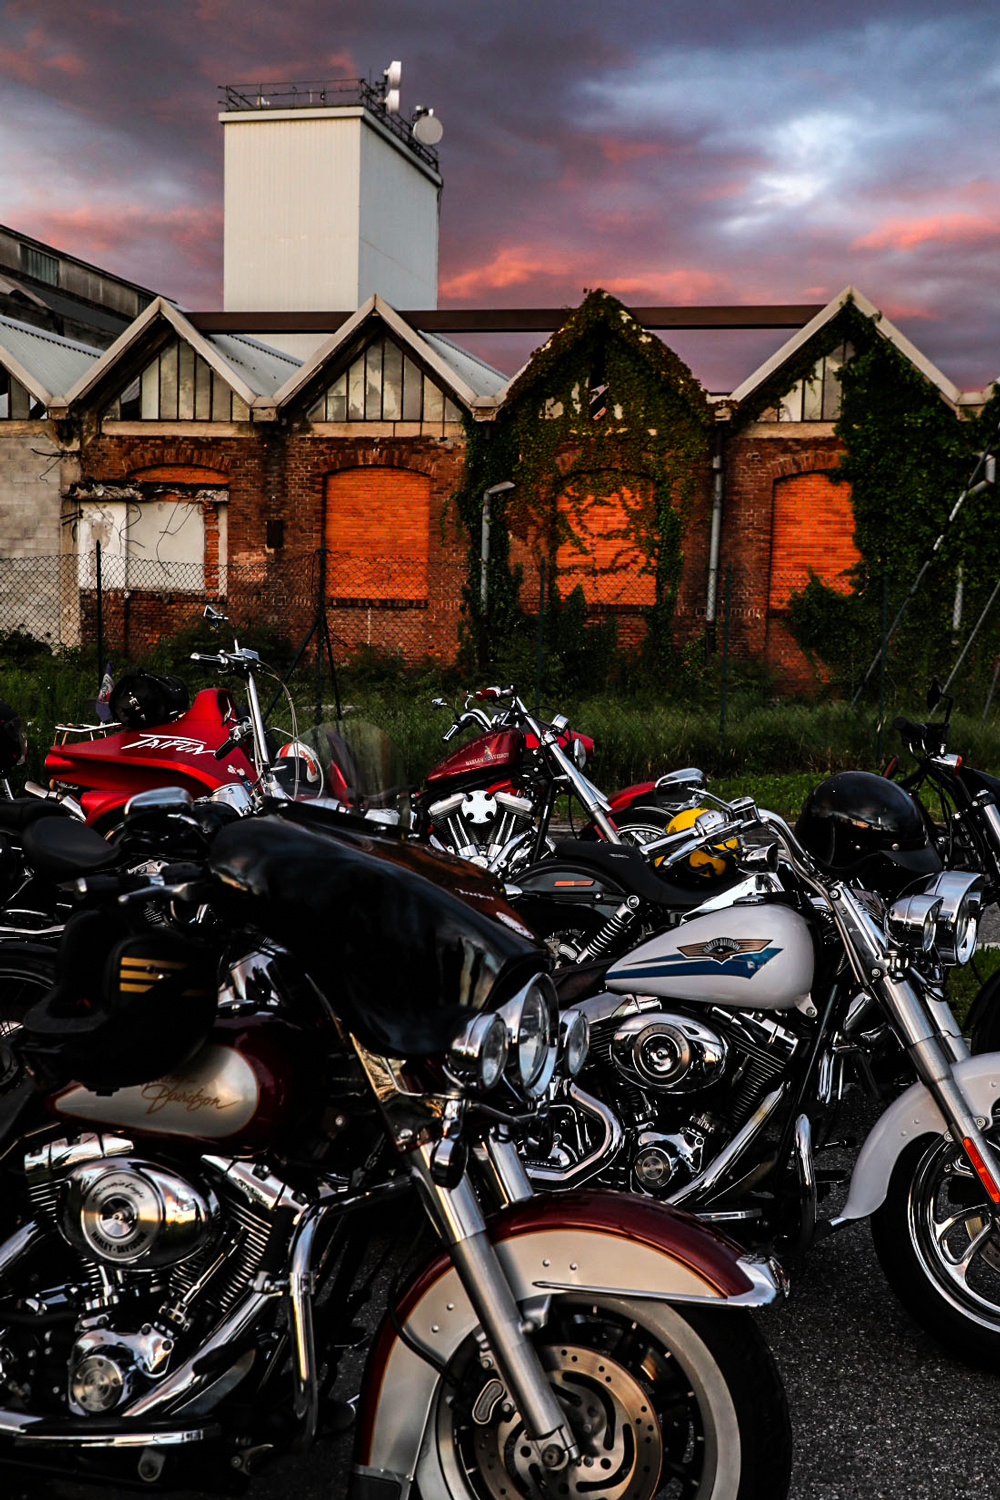 fotolivi brescia fotografie reportage moto tramonto